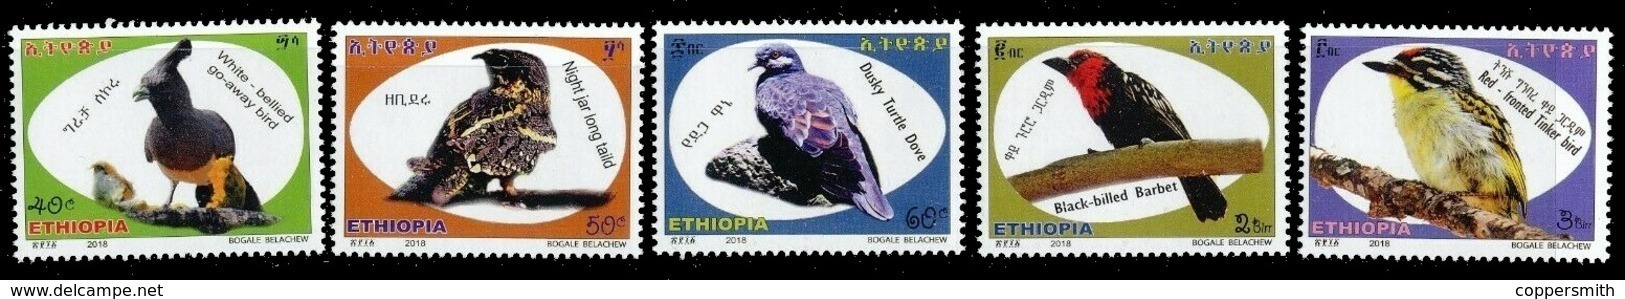 (477) Ethiopia / Ethiopie  Birds / Oiseaux / Vögel / Vogels / 2019  ** / Mnh  Michel - Ethiopia